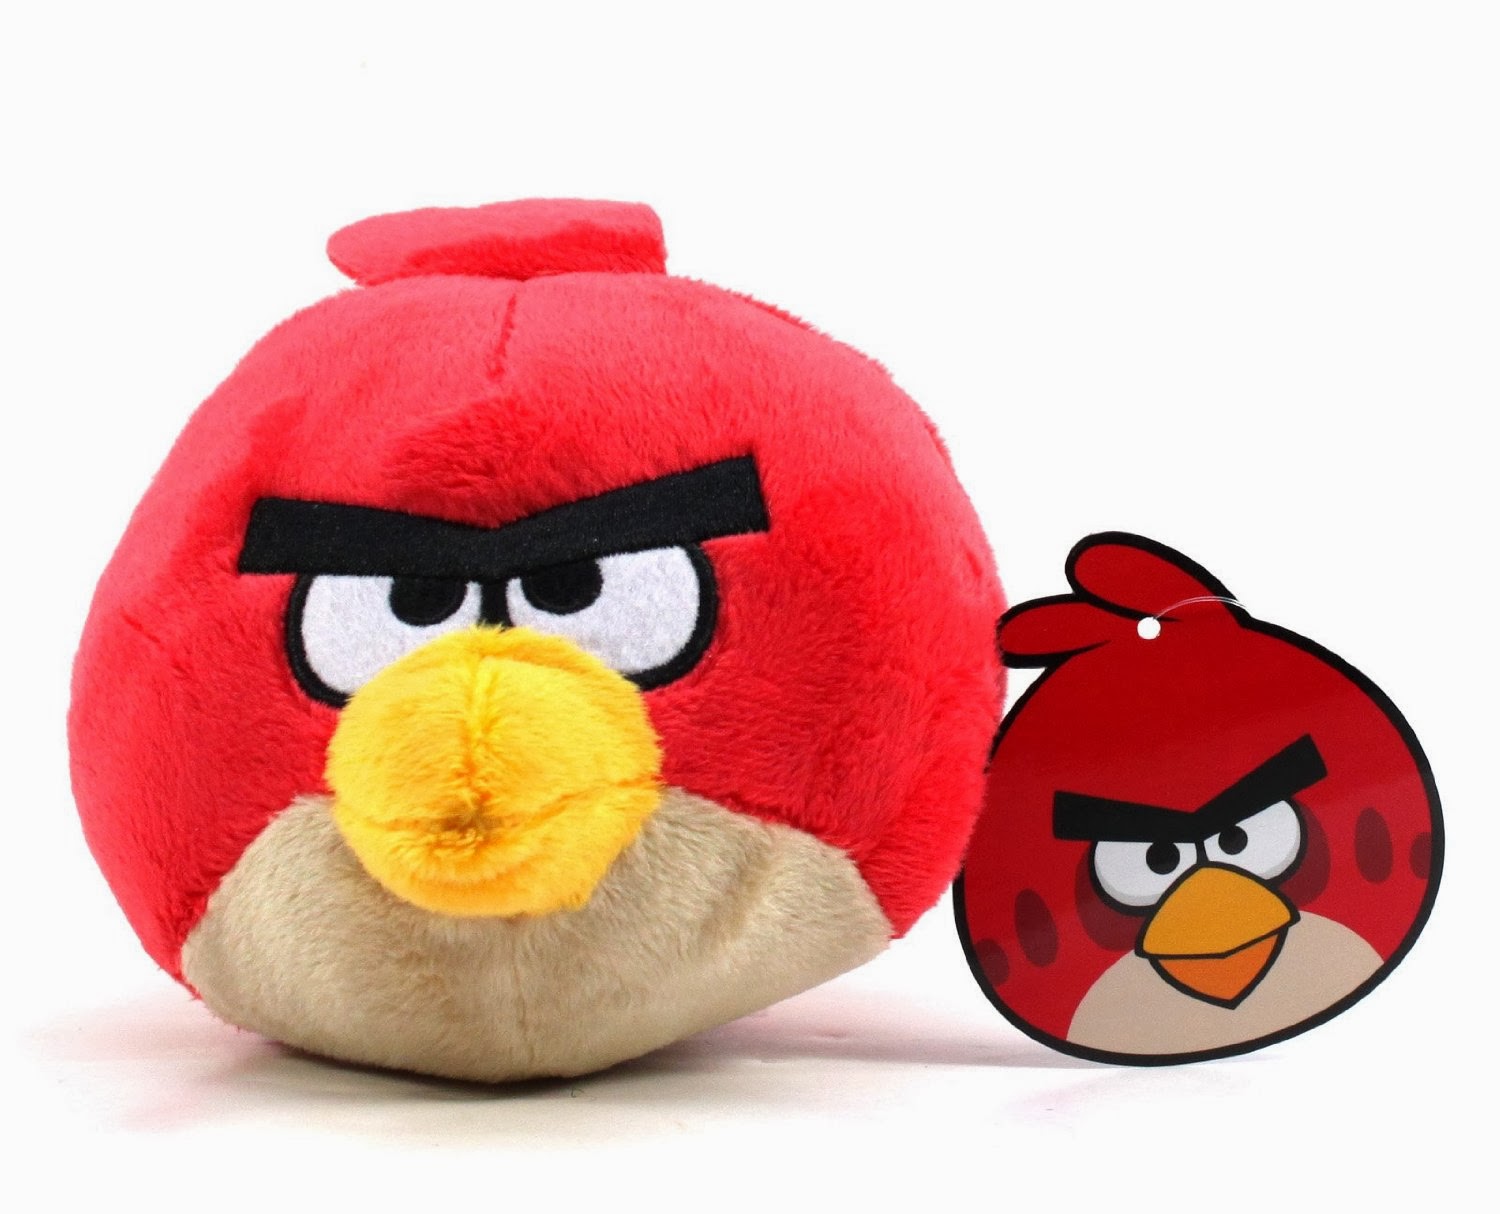 Обнови angry birds. Rovio Энгри бердз. Елочные игрушки Энгри бердз. Angry Birds Plush. Angry Birds Red игрушка.